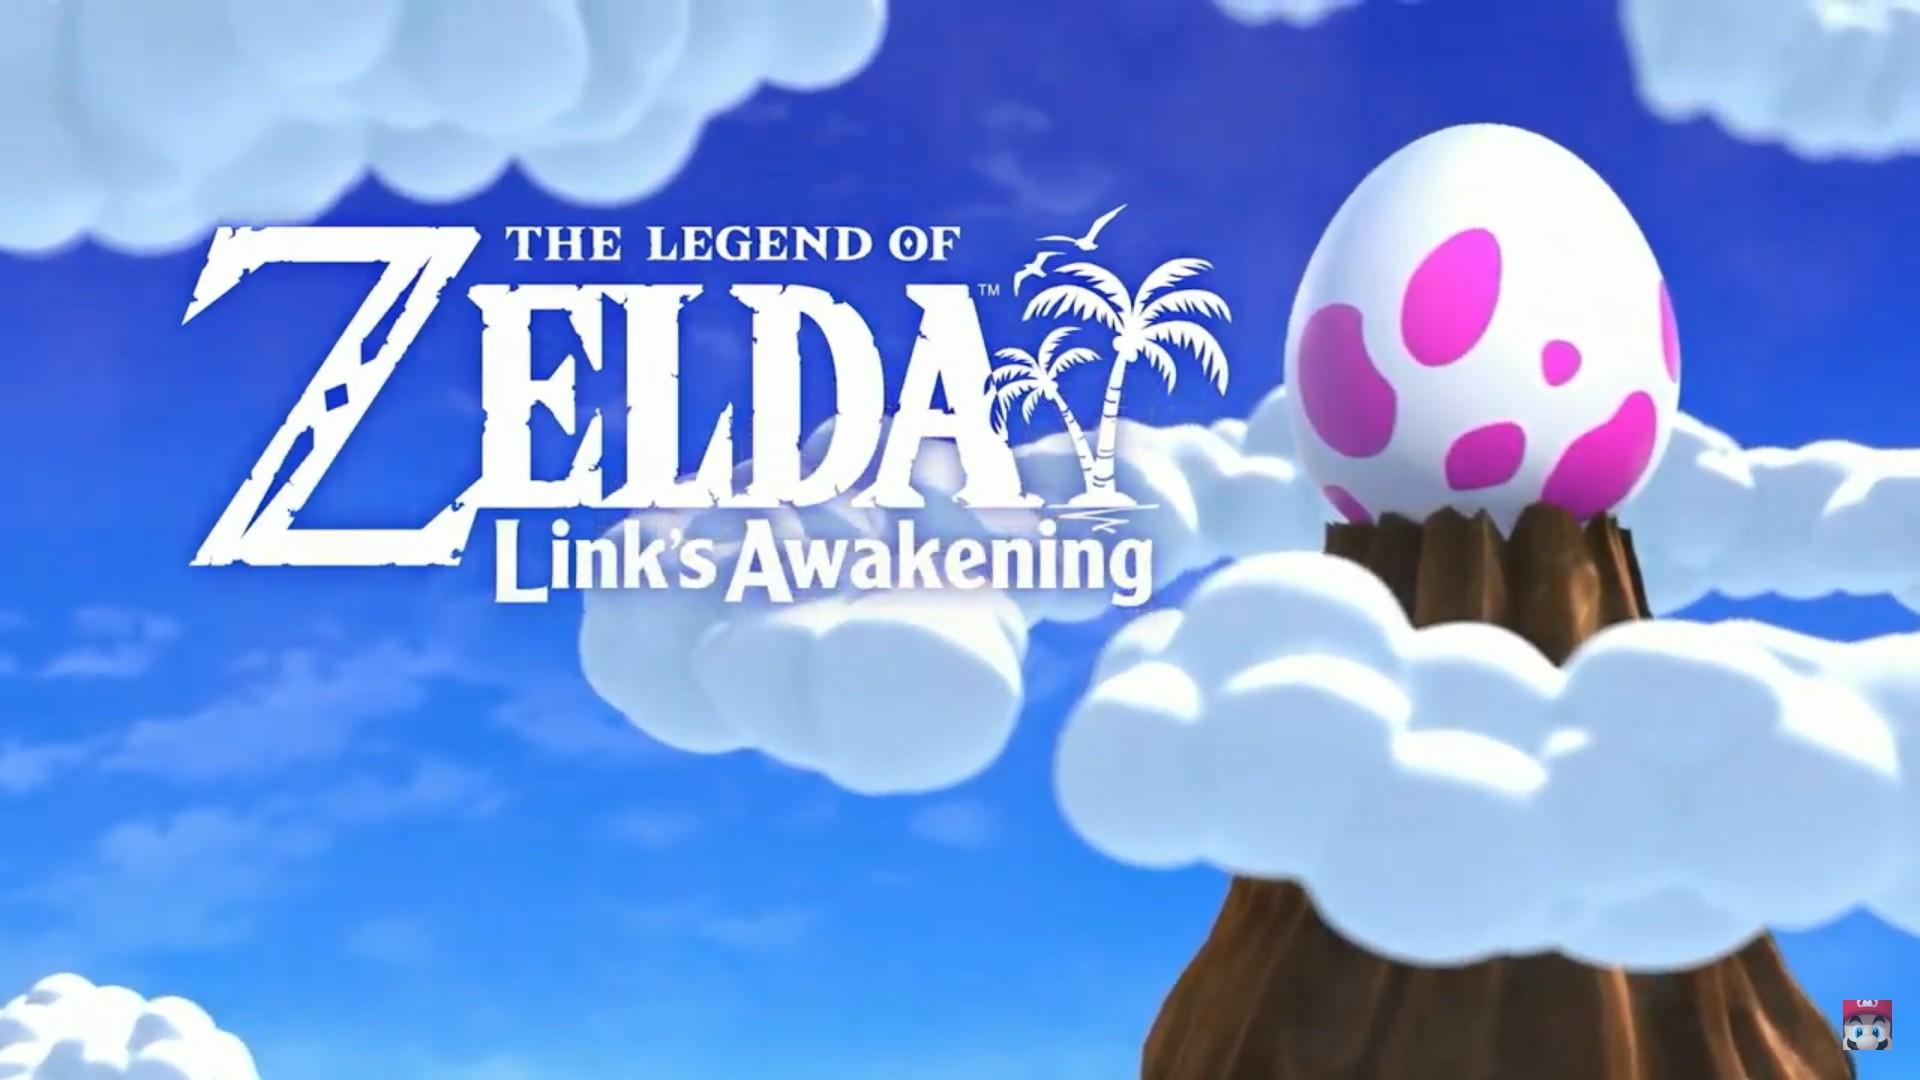 The Legend of Zelda: Link's Awakening arrives on the Switch